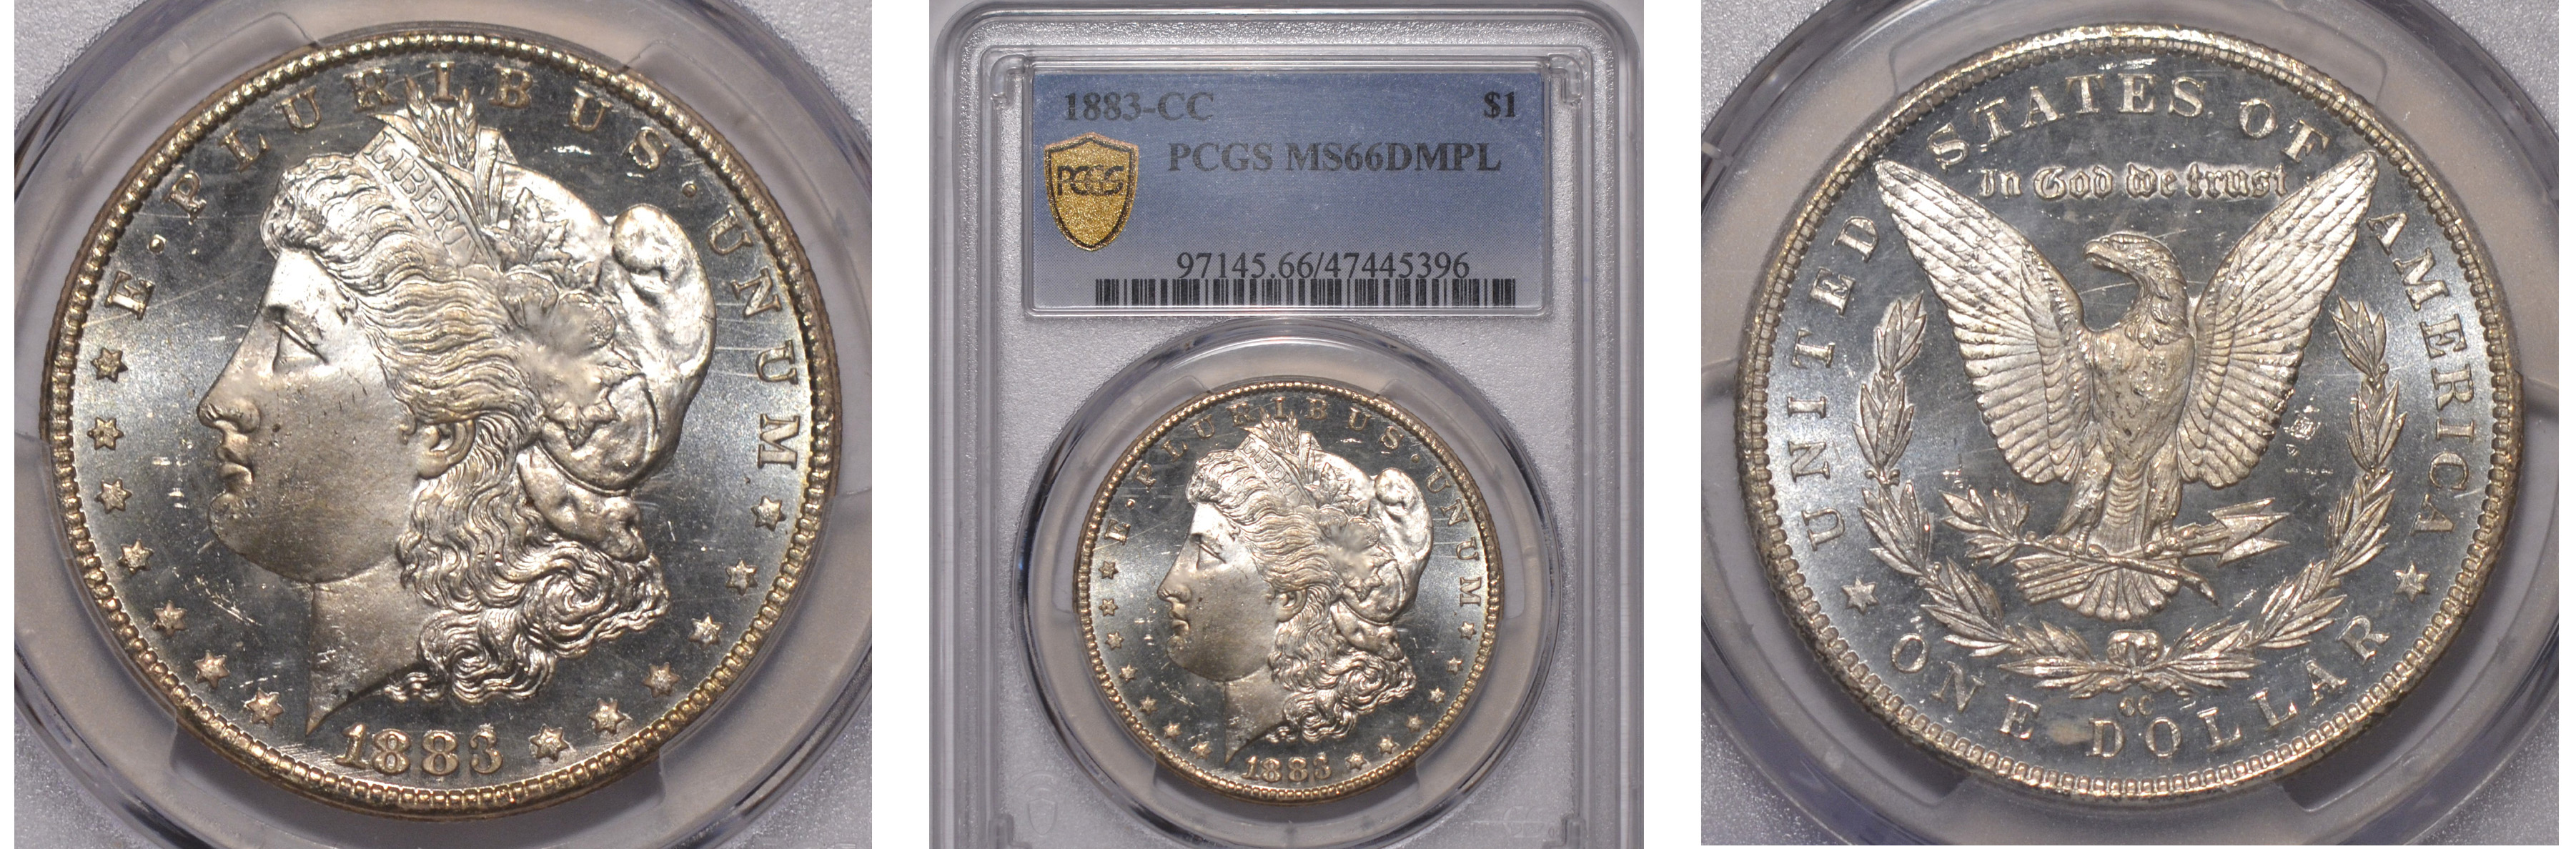 1883-CC Morgan Dollar PCGS MS66